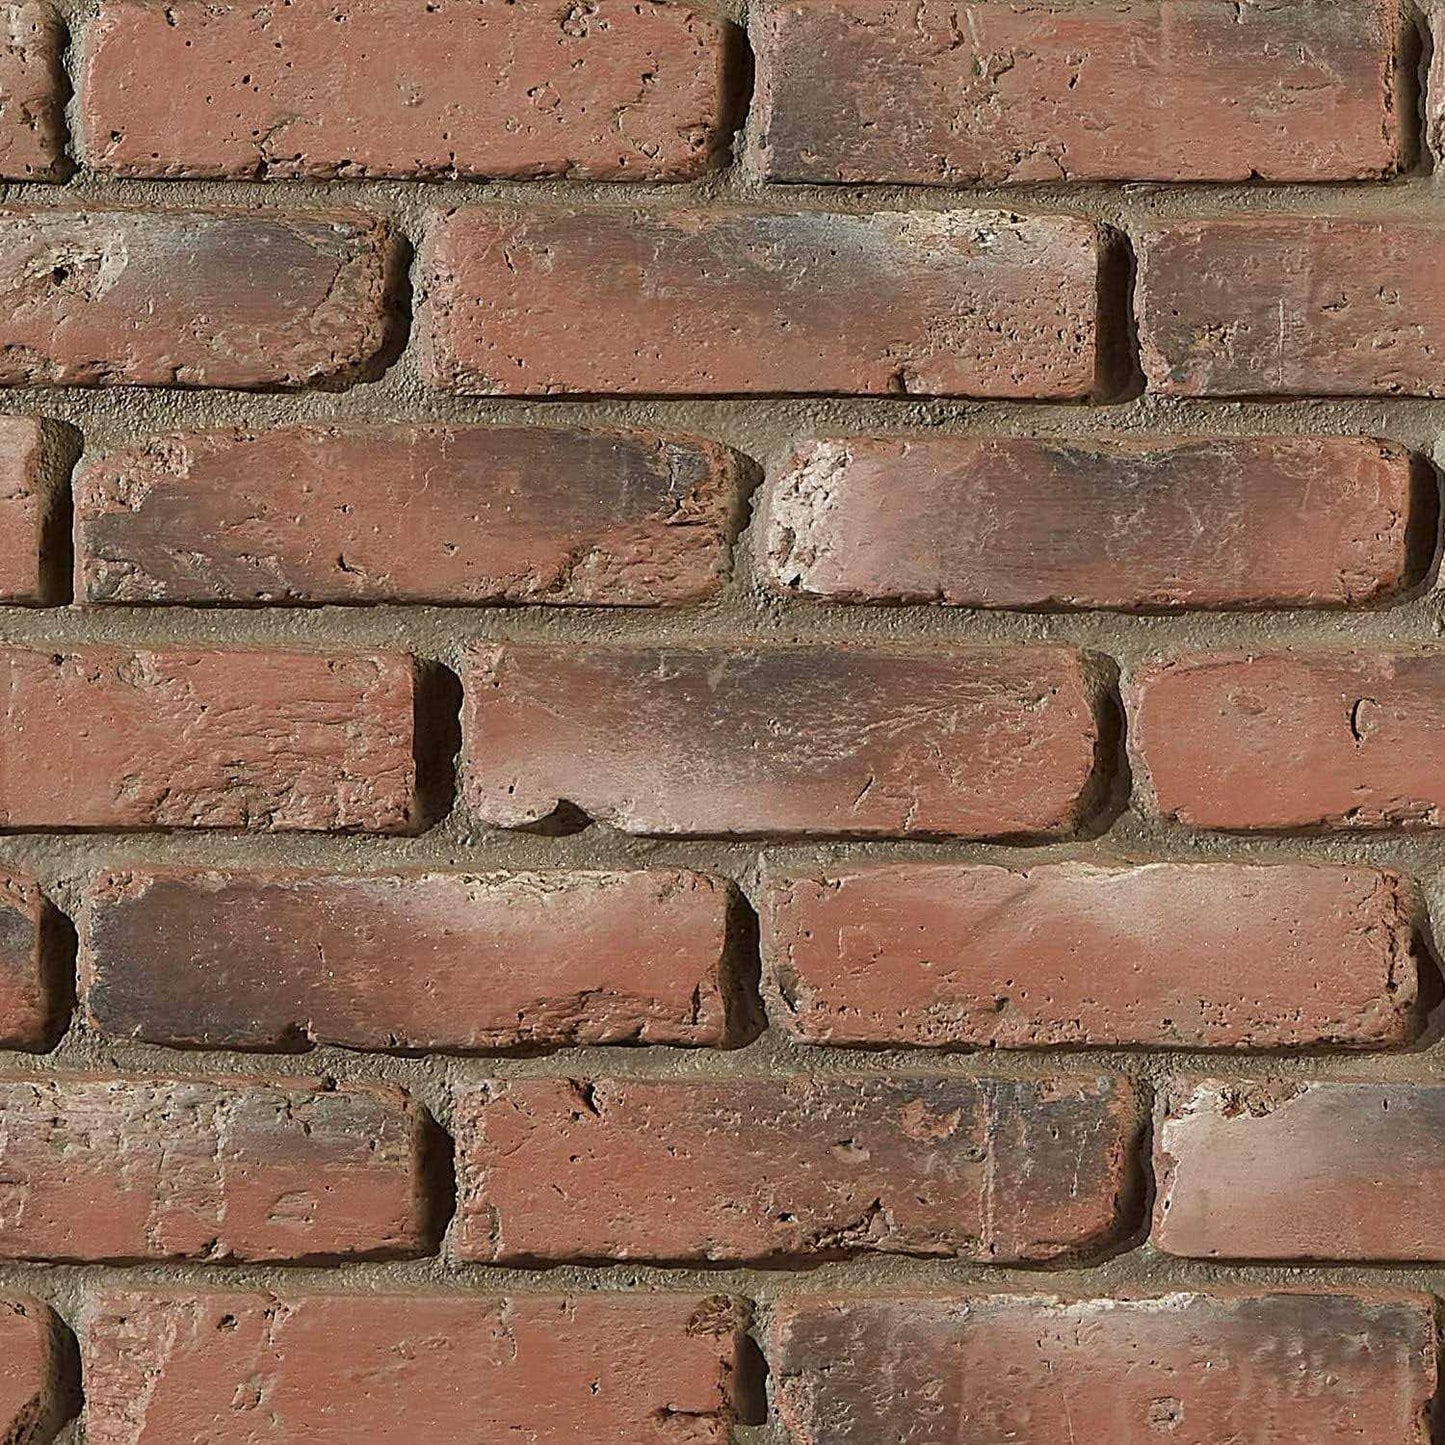 Authentic AZ Faux Brick Wall Panels: Easy DIY Realistic Old Medford Brick Look!